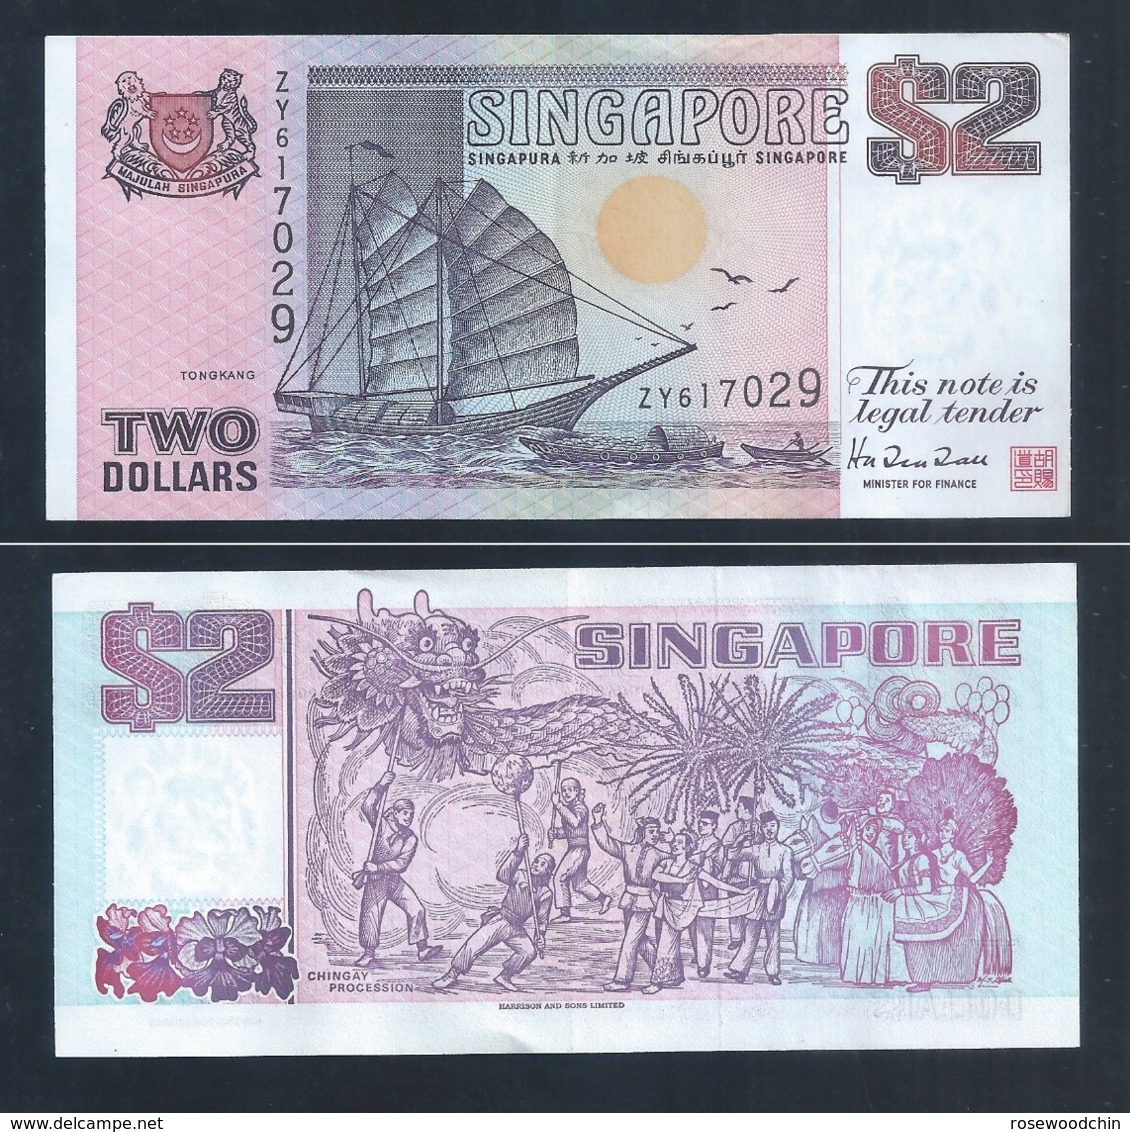 1 Pc. Of Singapore $2 Tong Kang / Ship Series Currency Paper Money Banknote (#137B) AU - Singapore